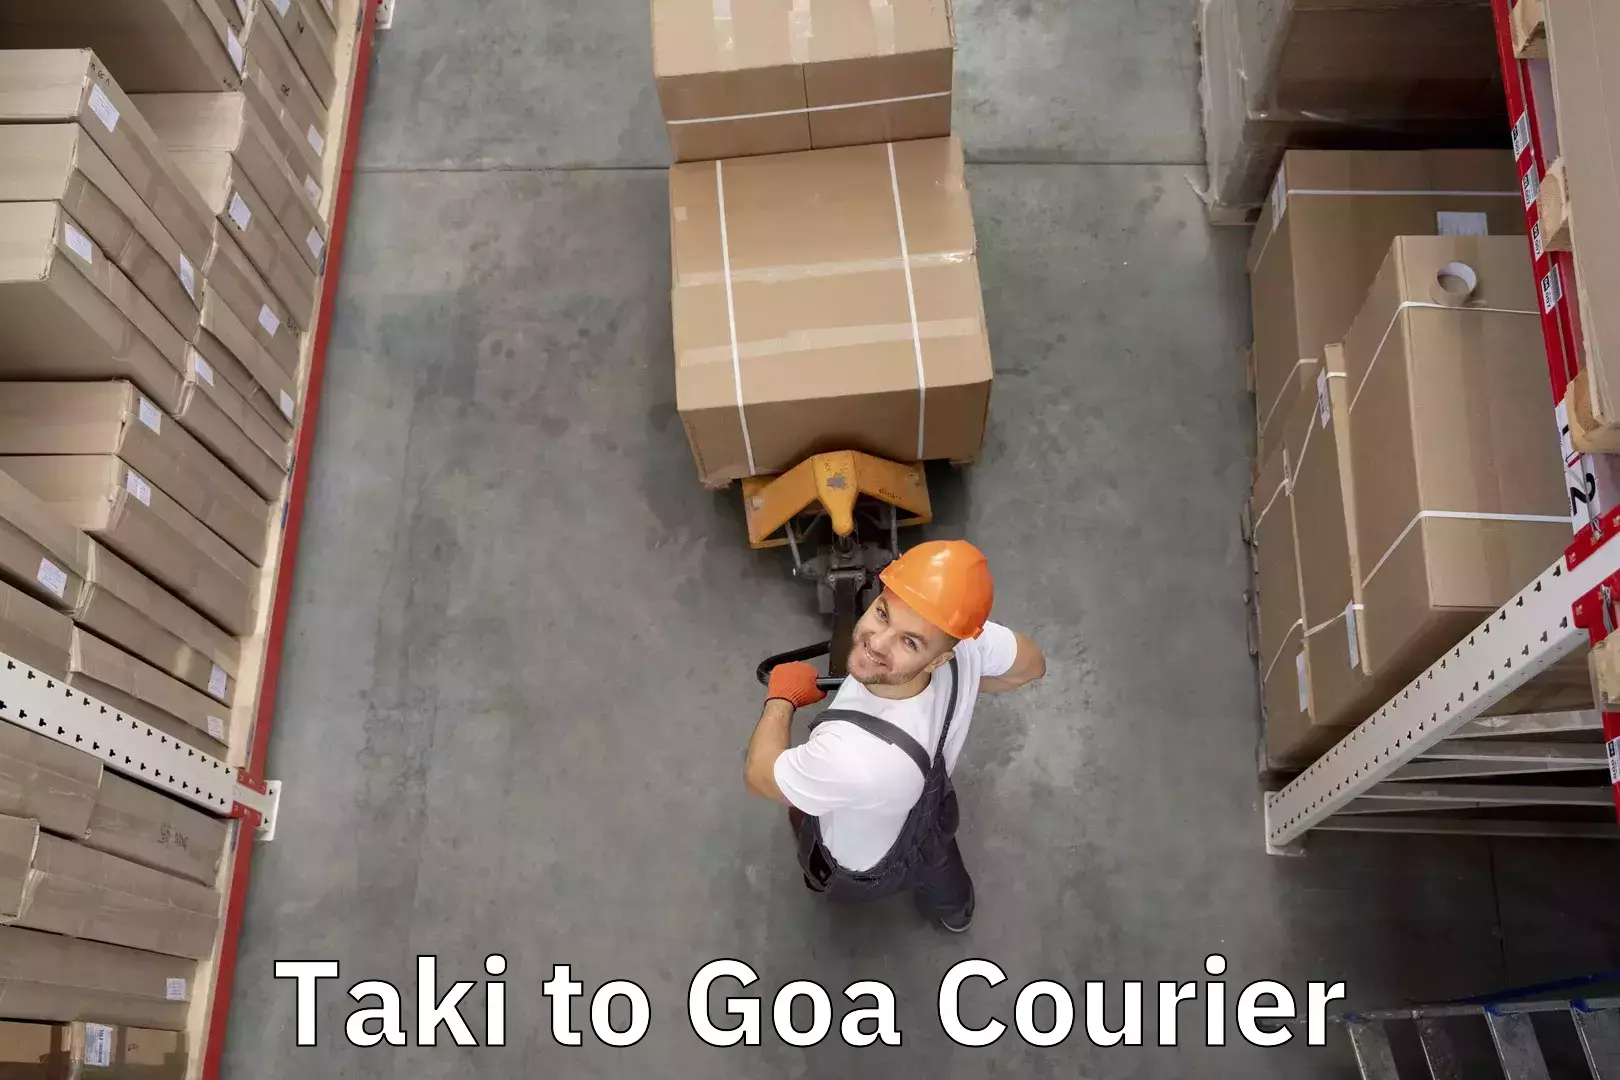 Emergency baggage service Taki to Goa